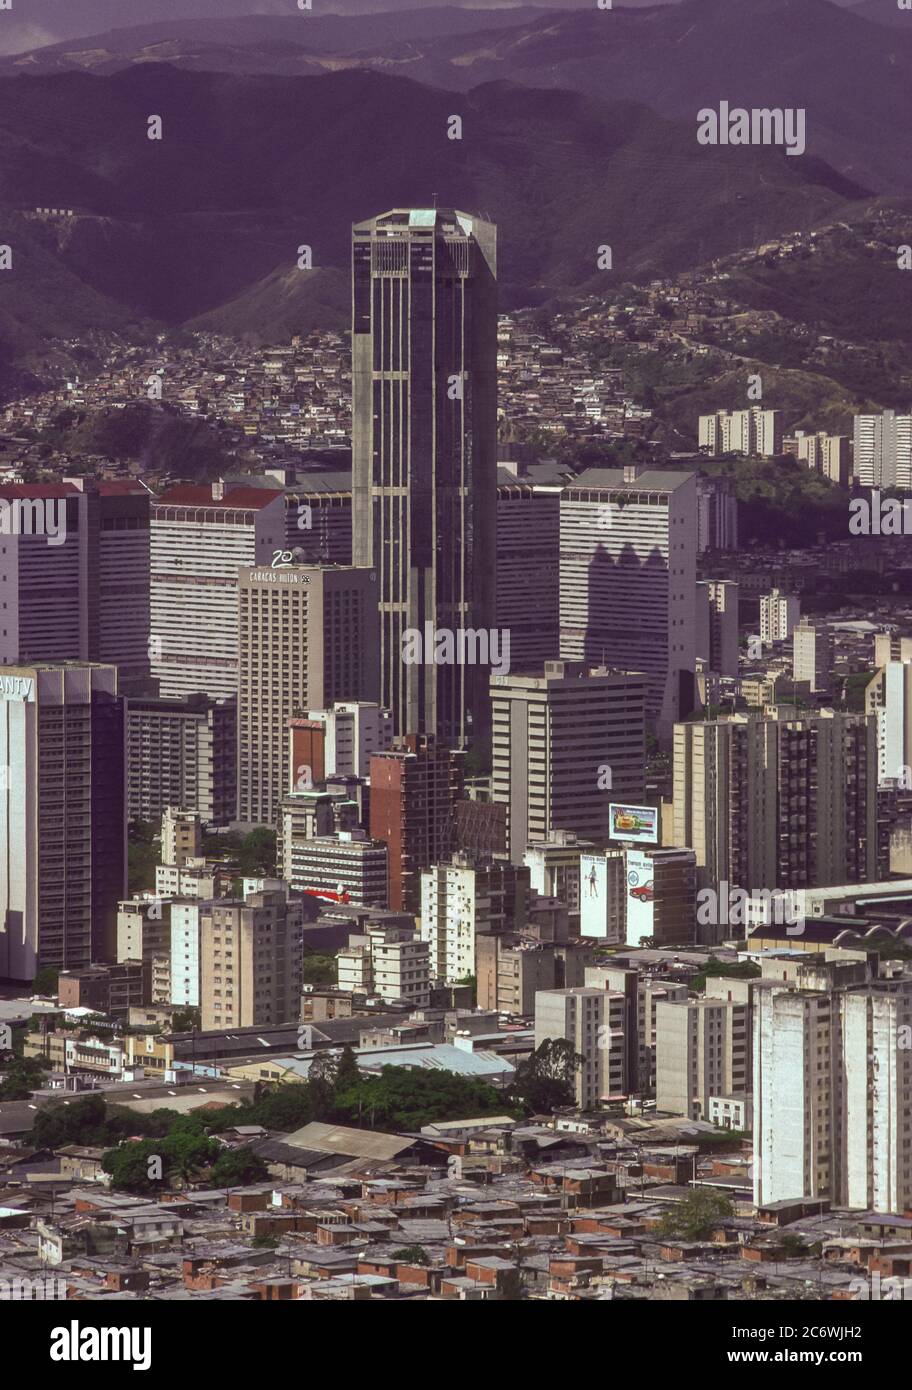 CARACAS, VENEZUELA - Dowtown Caracas urban landscape with skyscrapers. Stock Photo